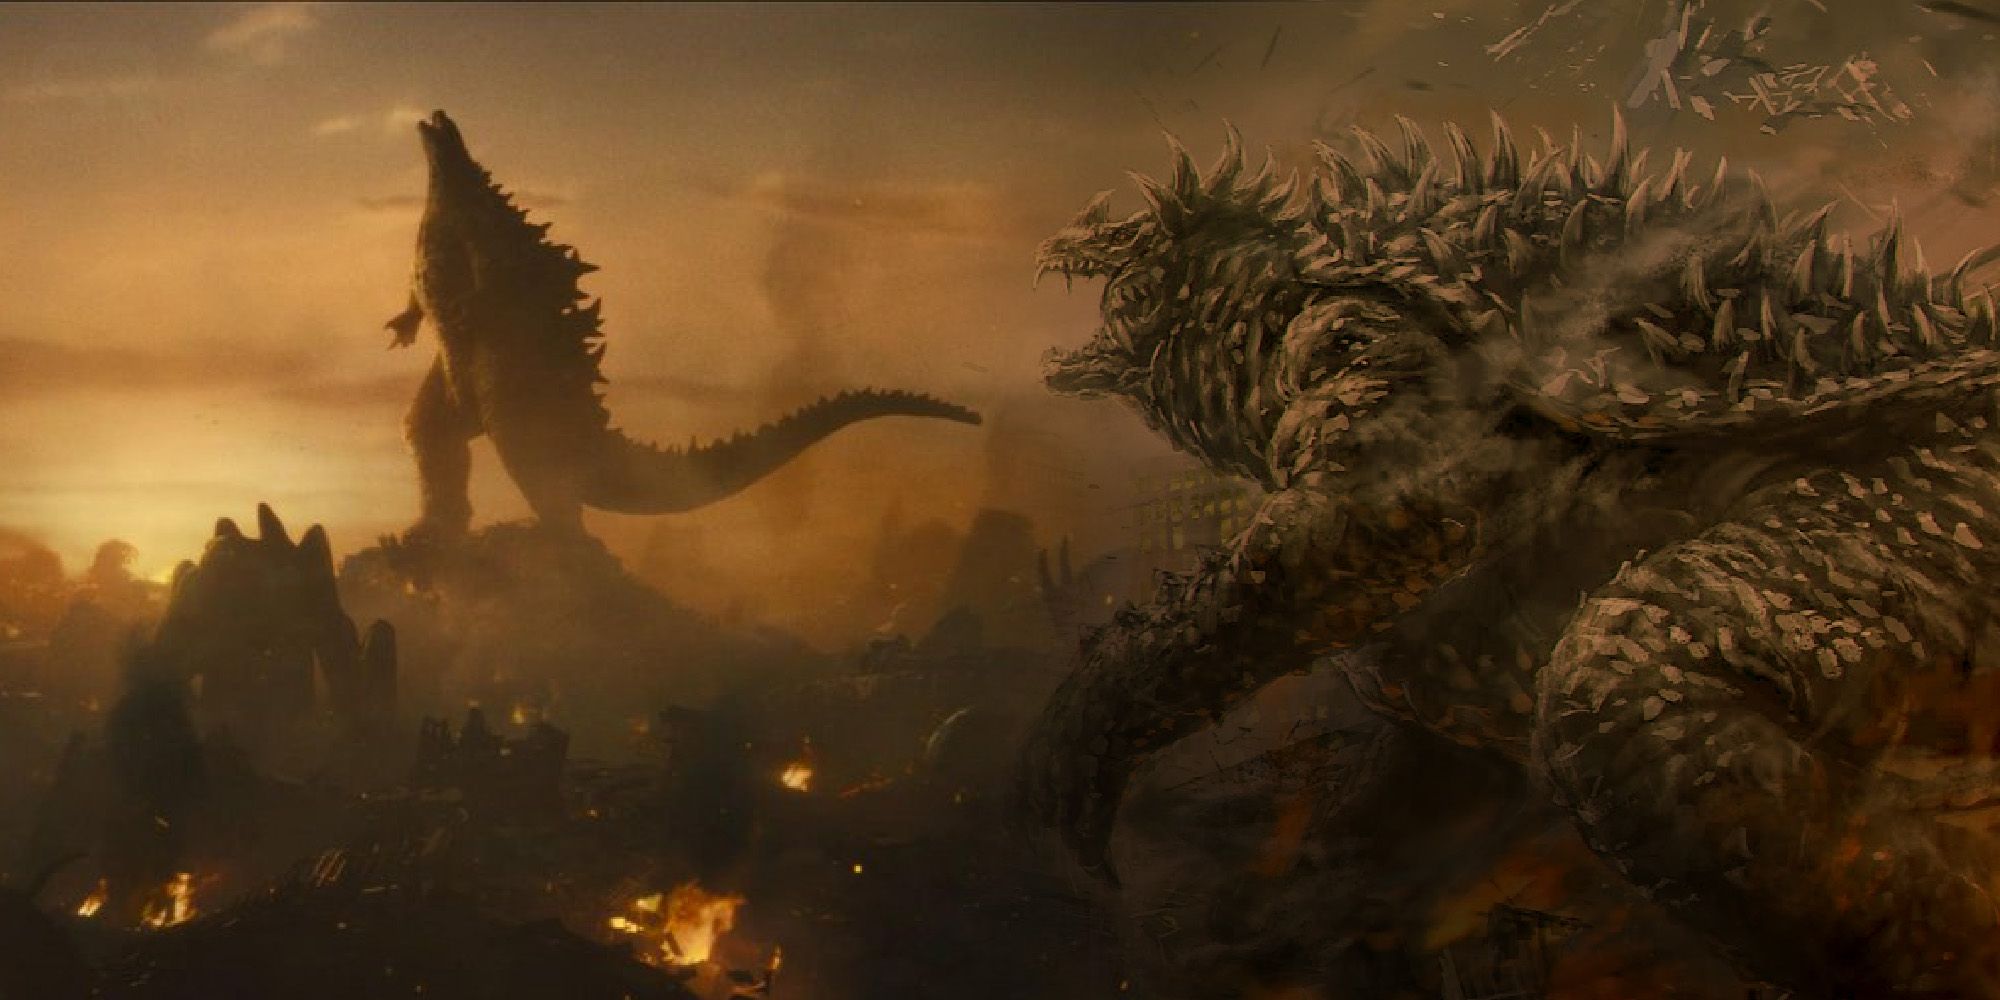 Godzilla stares at the hollow earth